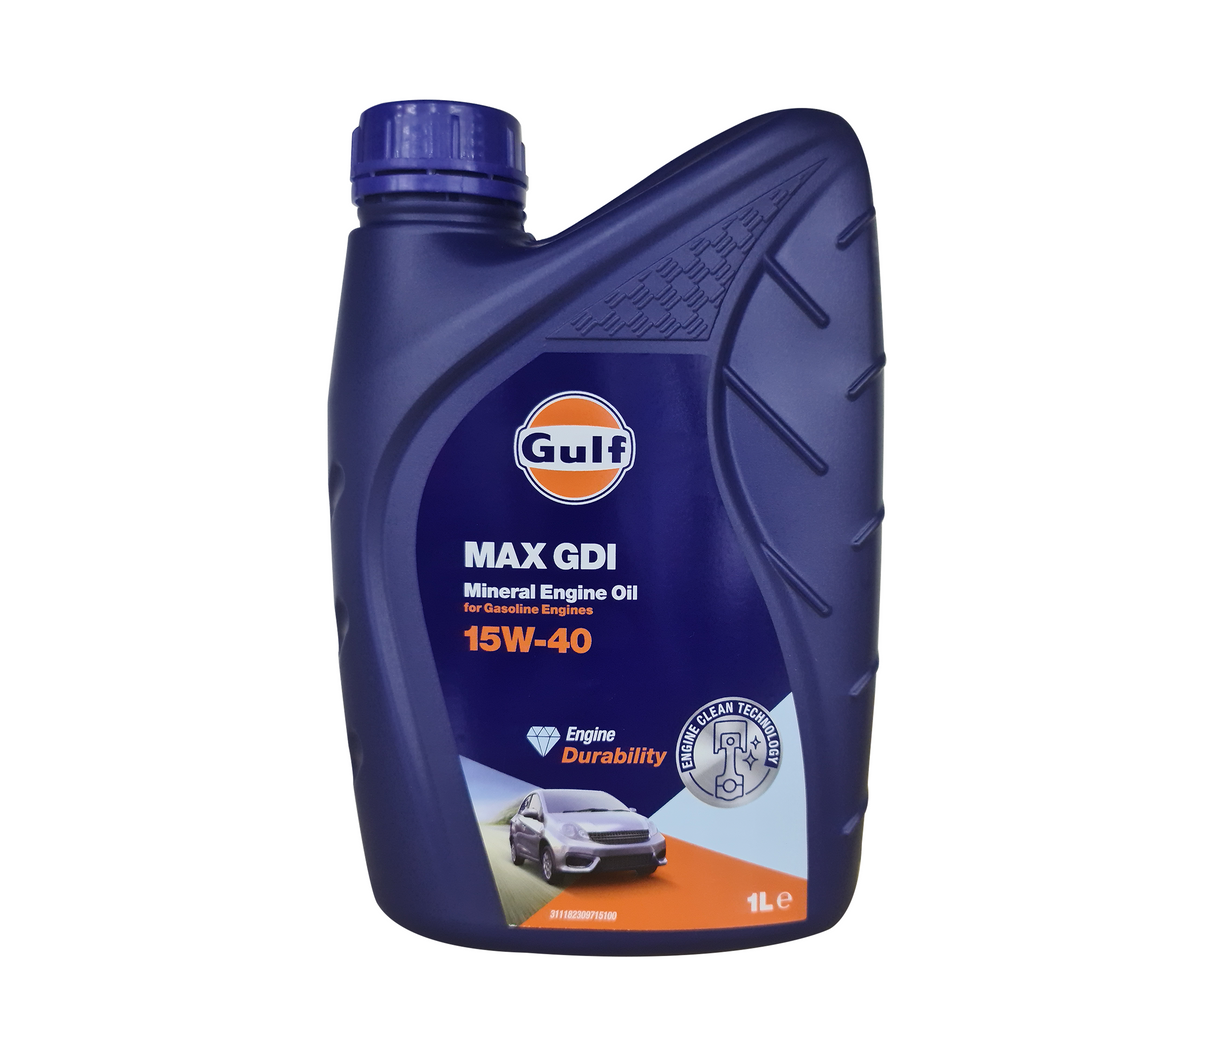 Lubricante automotriz Max GDI 15W-40 mineral gasolina 1LT Gulf